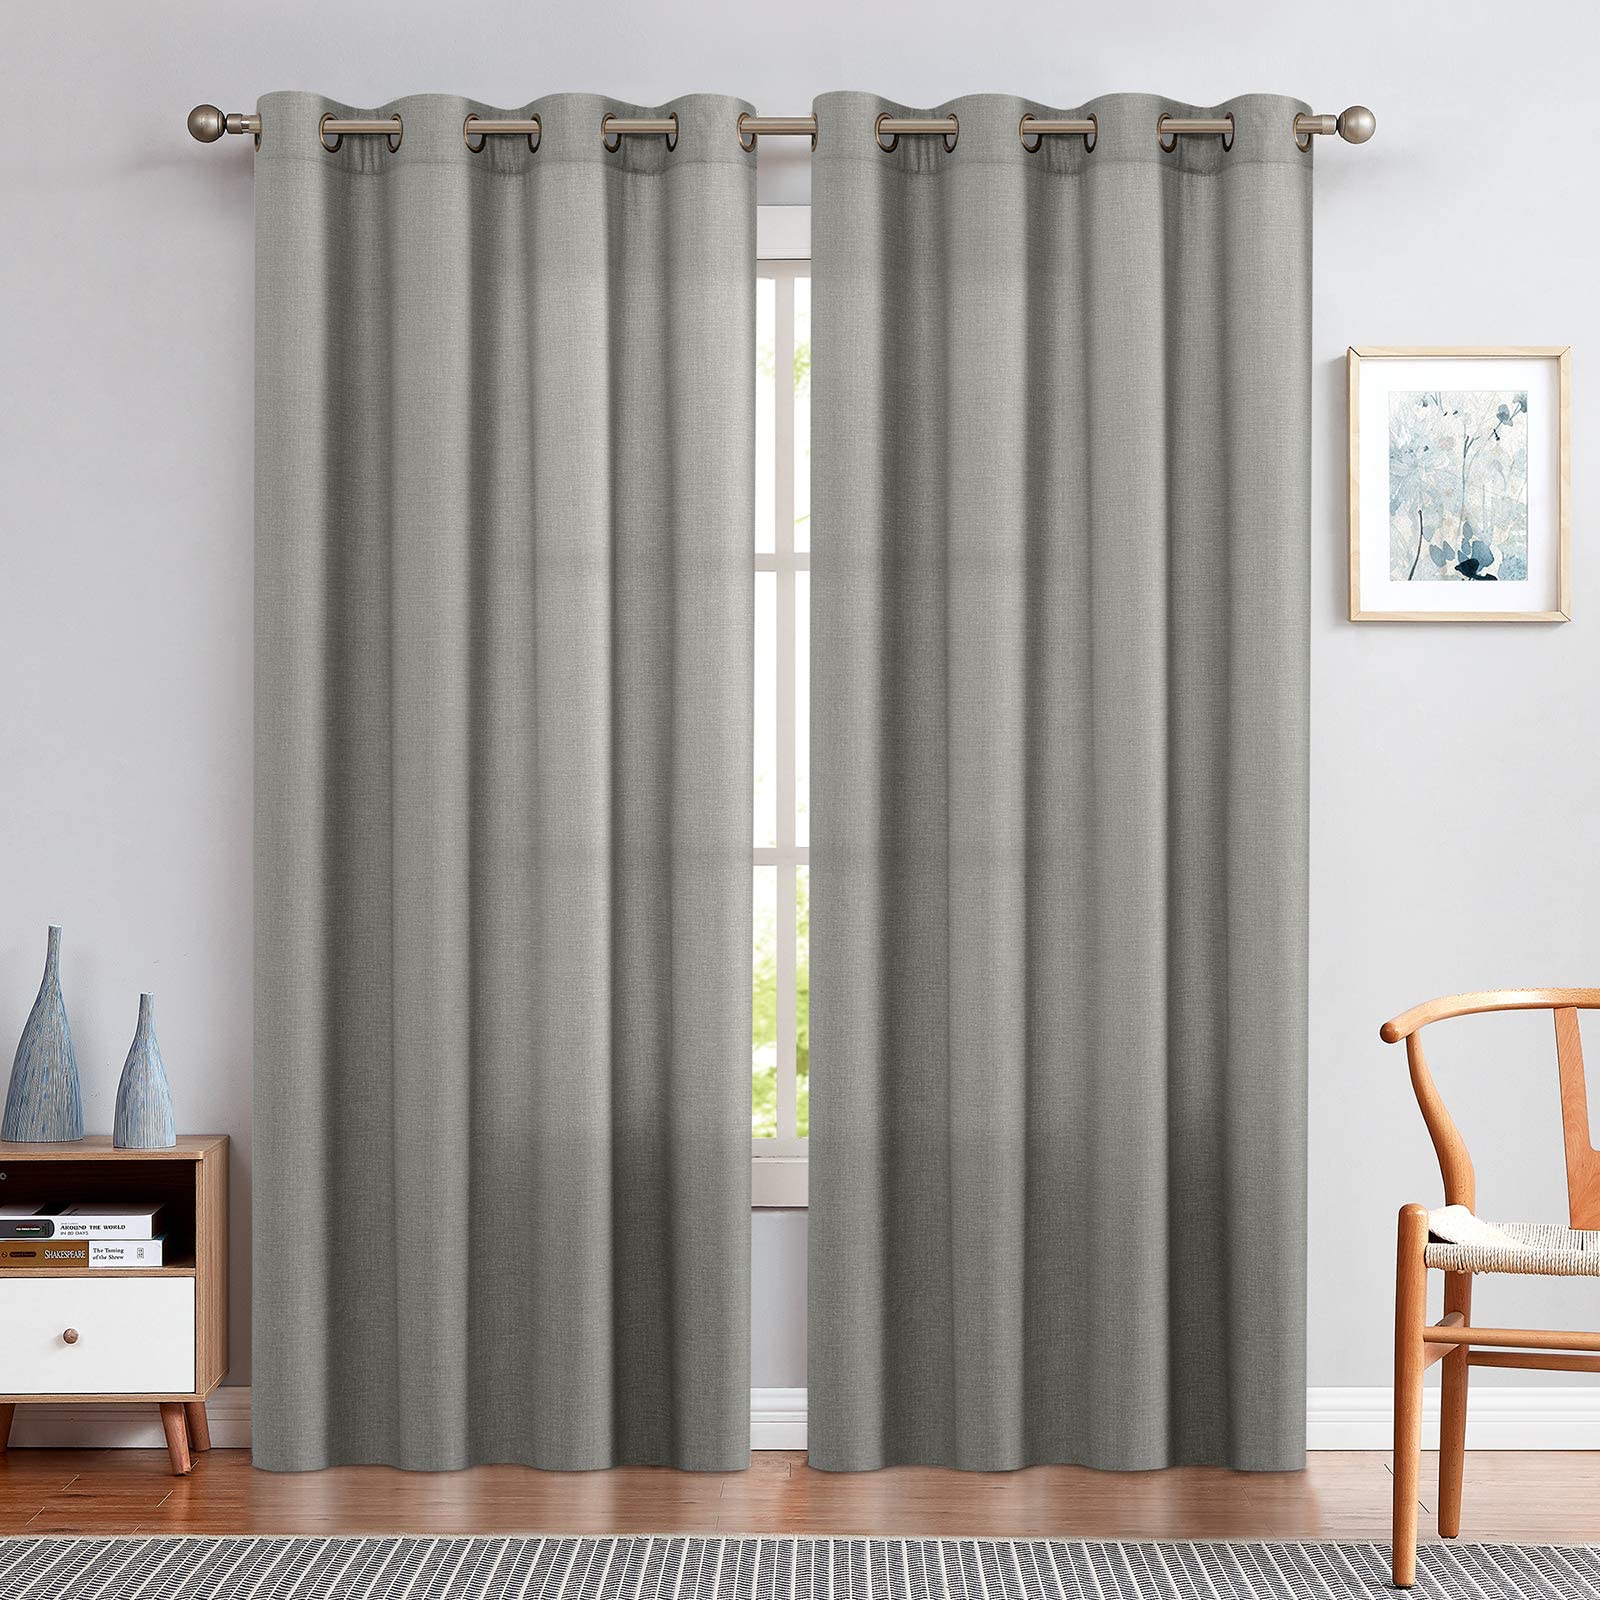 Dos capas tela estampada cortinas ventana cortinas para la sala de